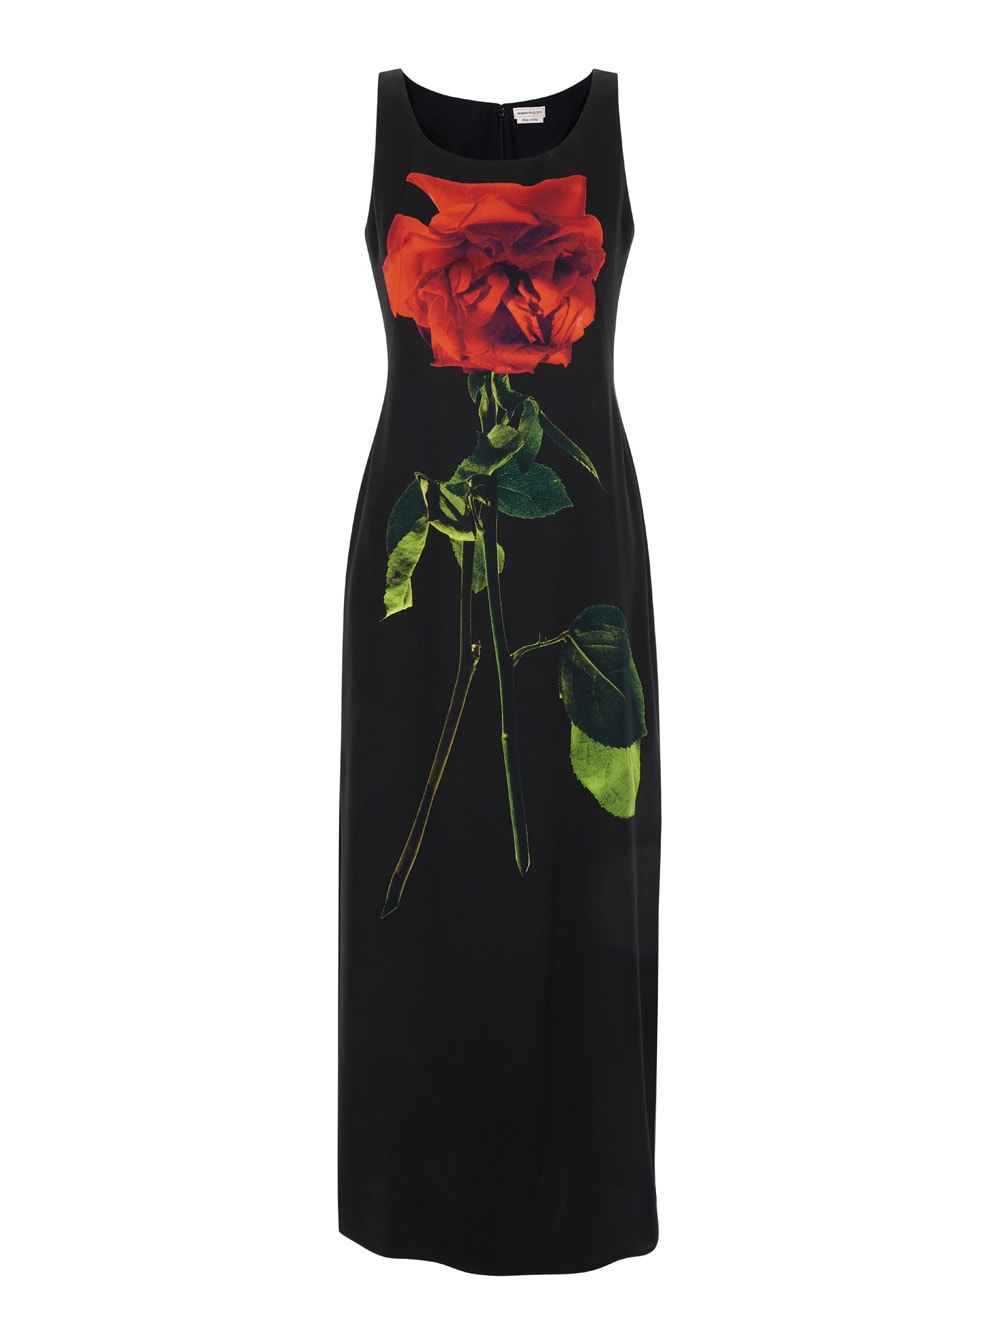 ALEXANDER MCQUEEN BLACK LONG DRESS WITH SHADOW ROSE PRINT IN SILK WOMAN